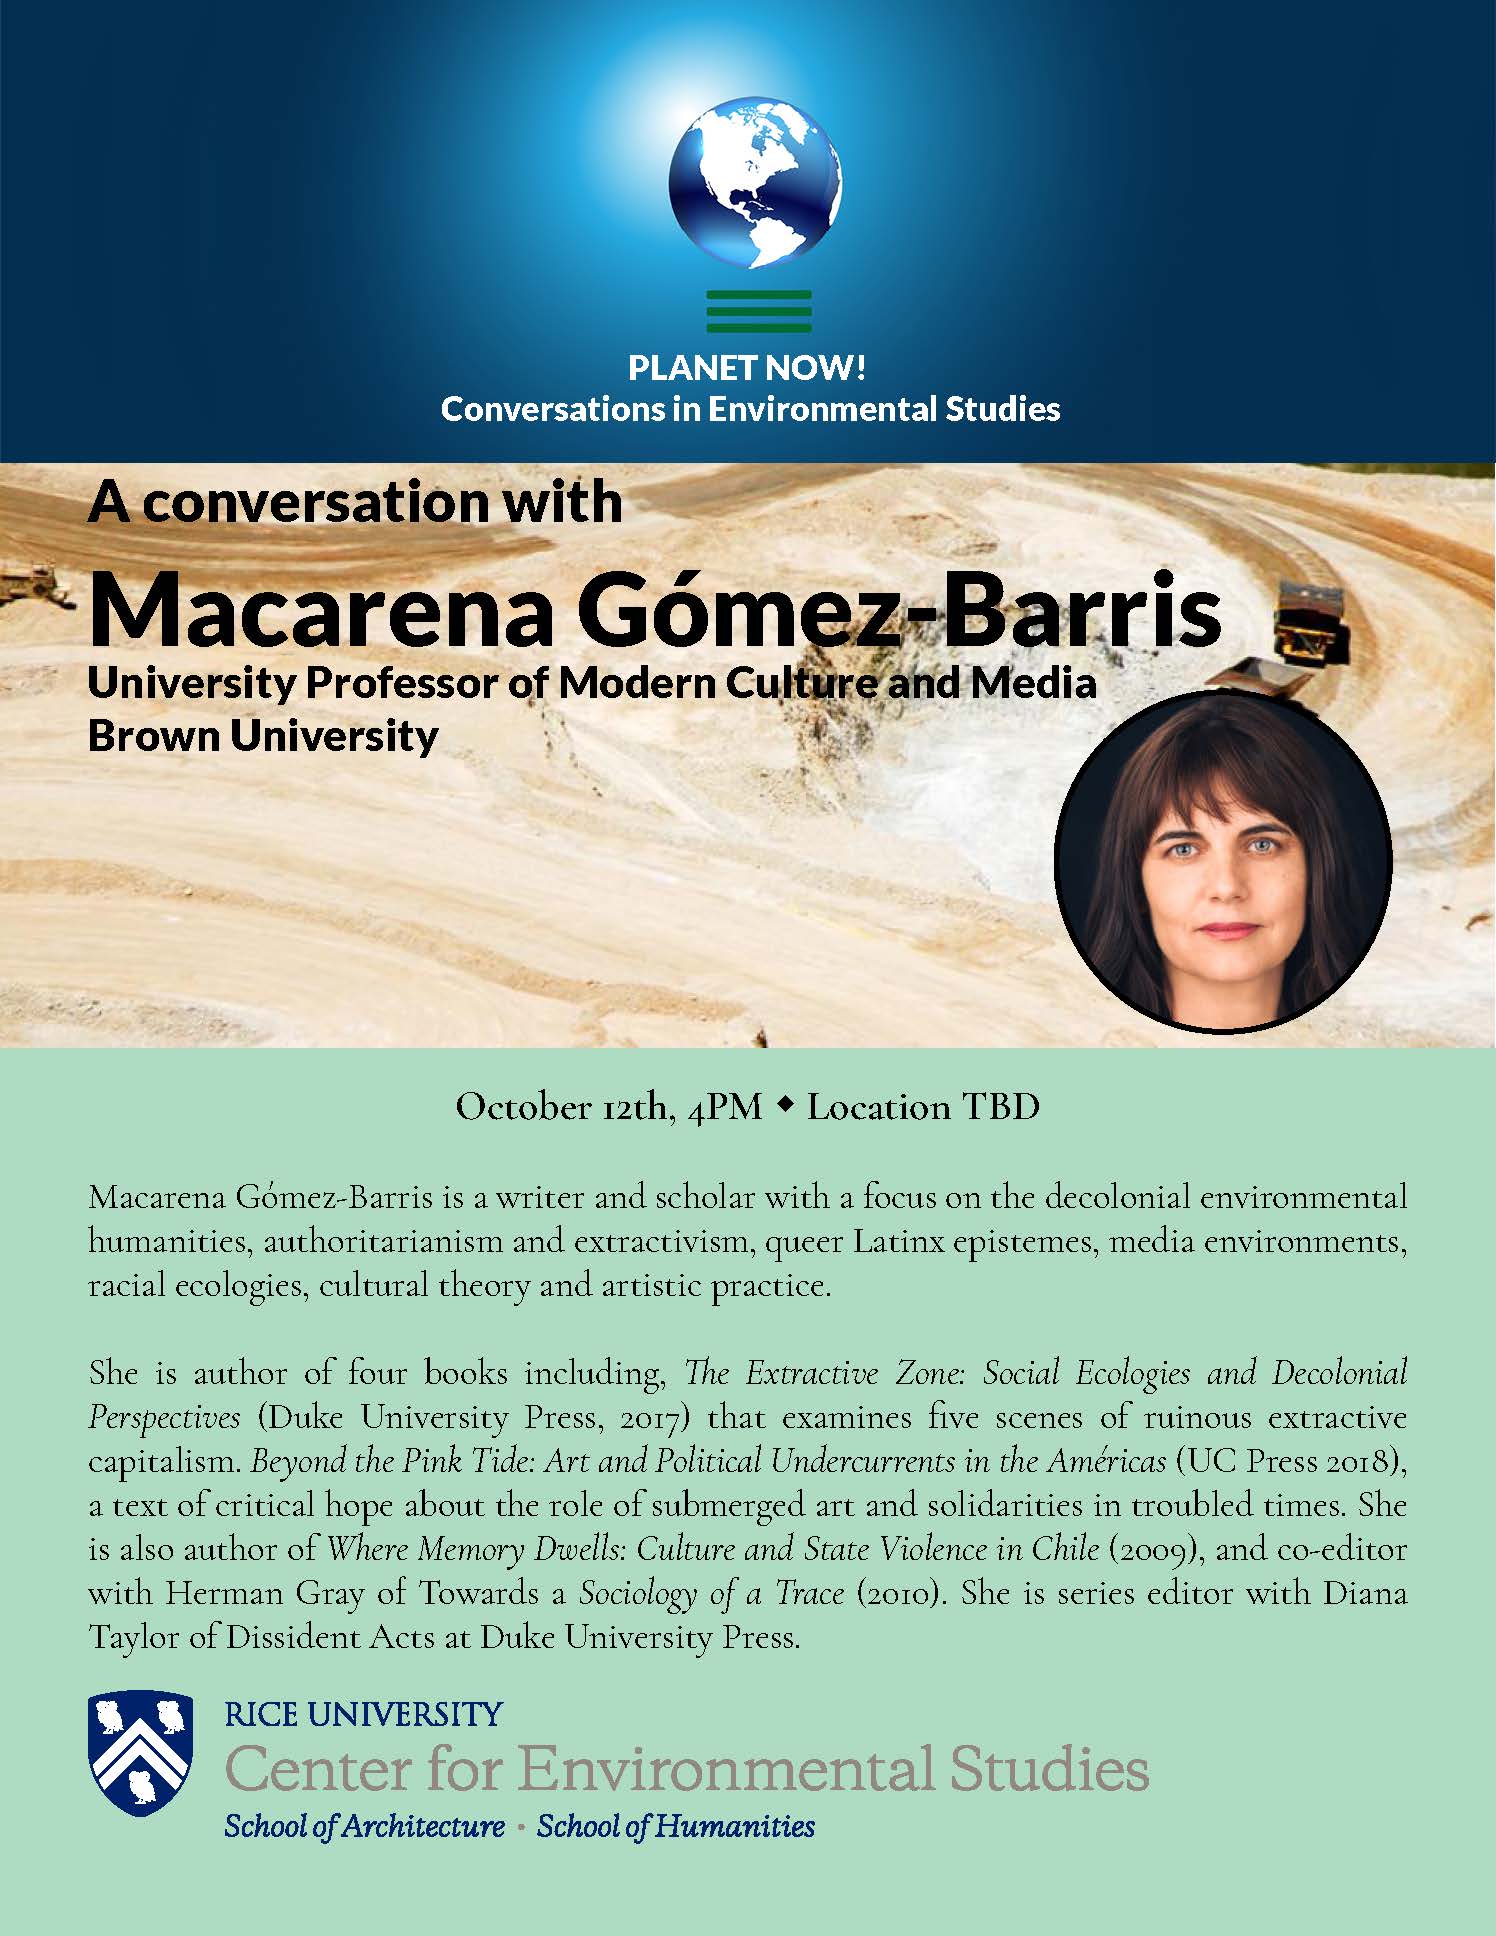 Macarena Gómez-Barris